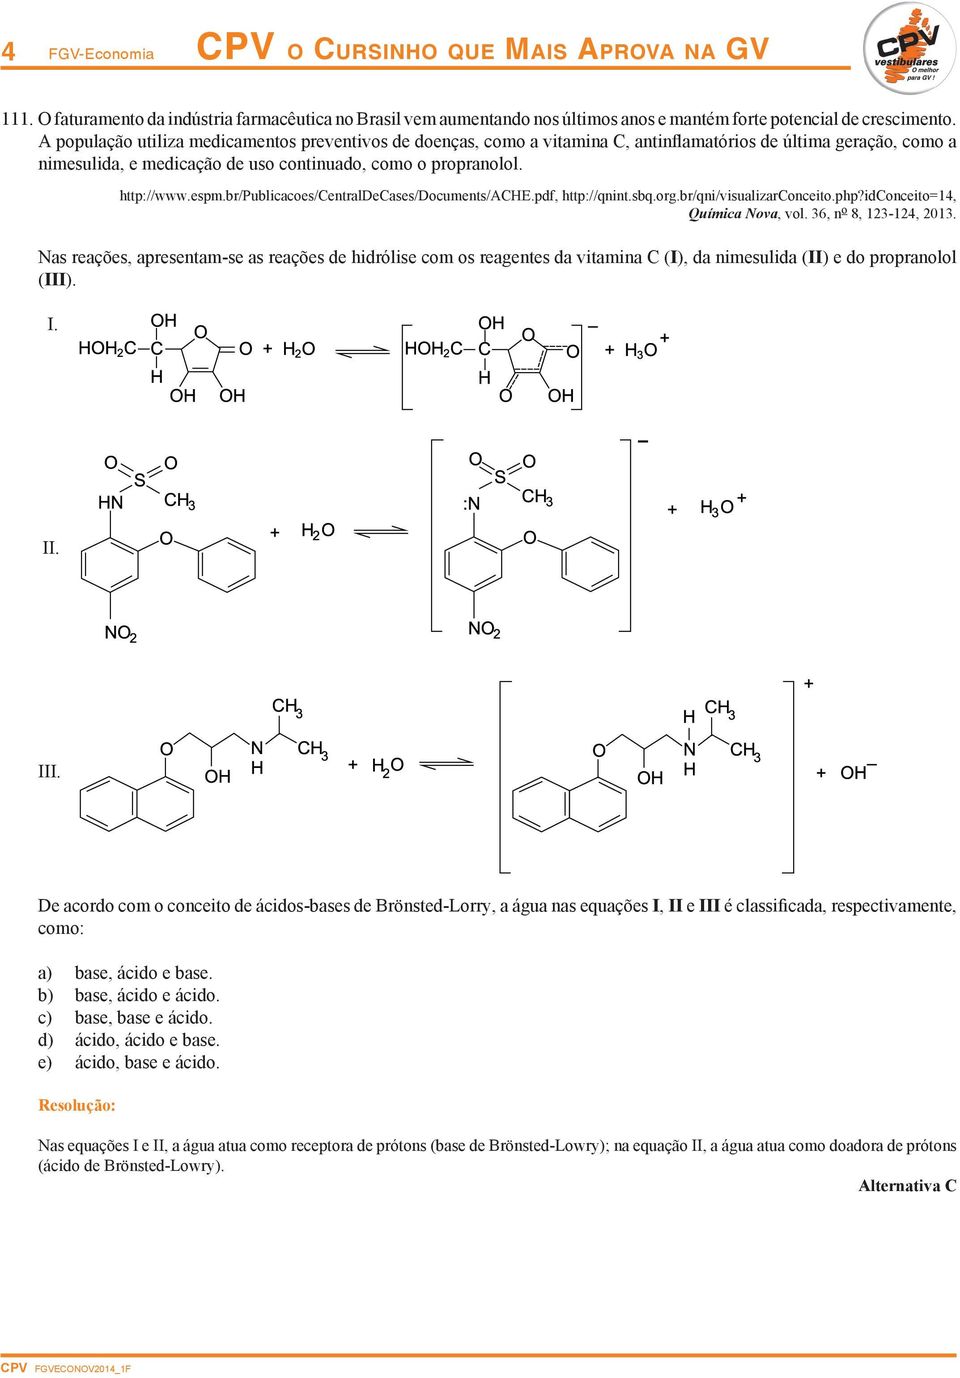 br/publicacoes/centraldecases/documents/ache.pdf, http://qnint.sbq.org.br/qni/visualizarconceito.php?idconceito=14, Química Nova, vol. 36, n o 8, 123-124, 2013.